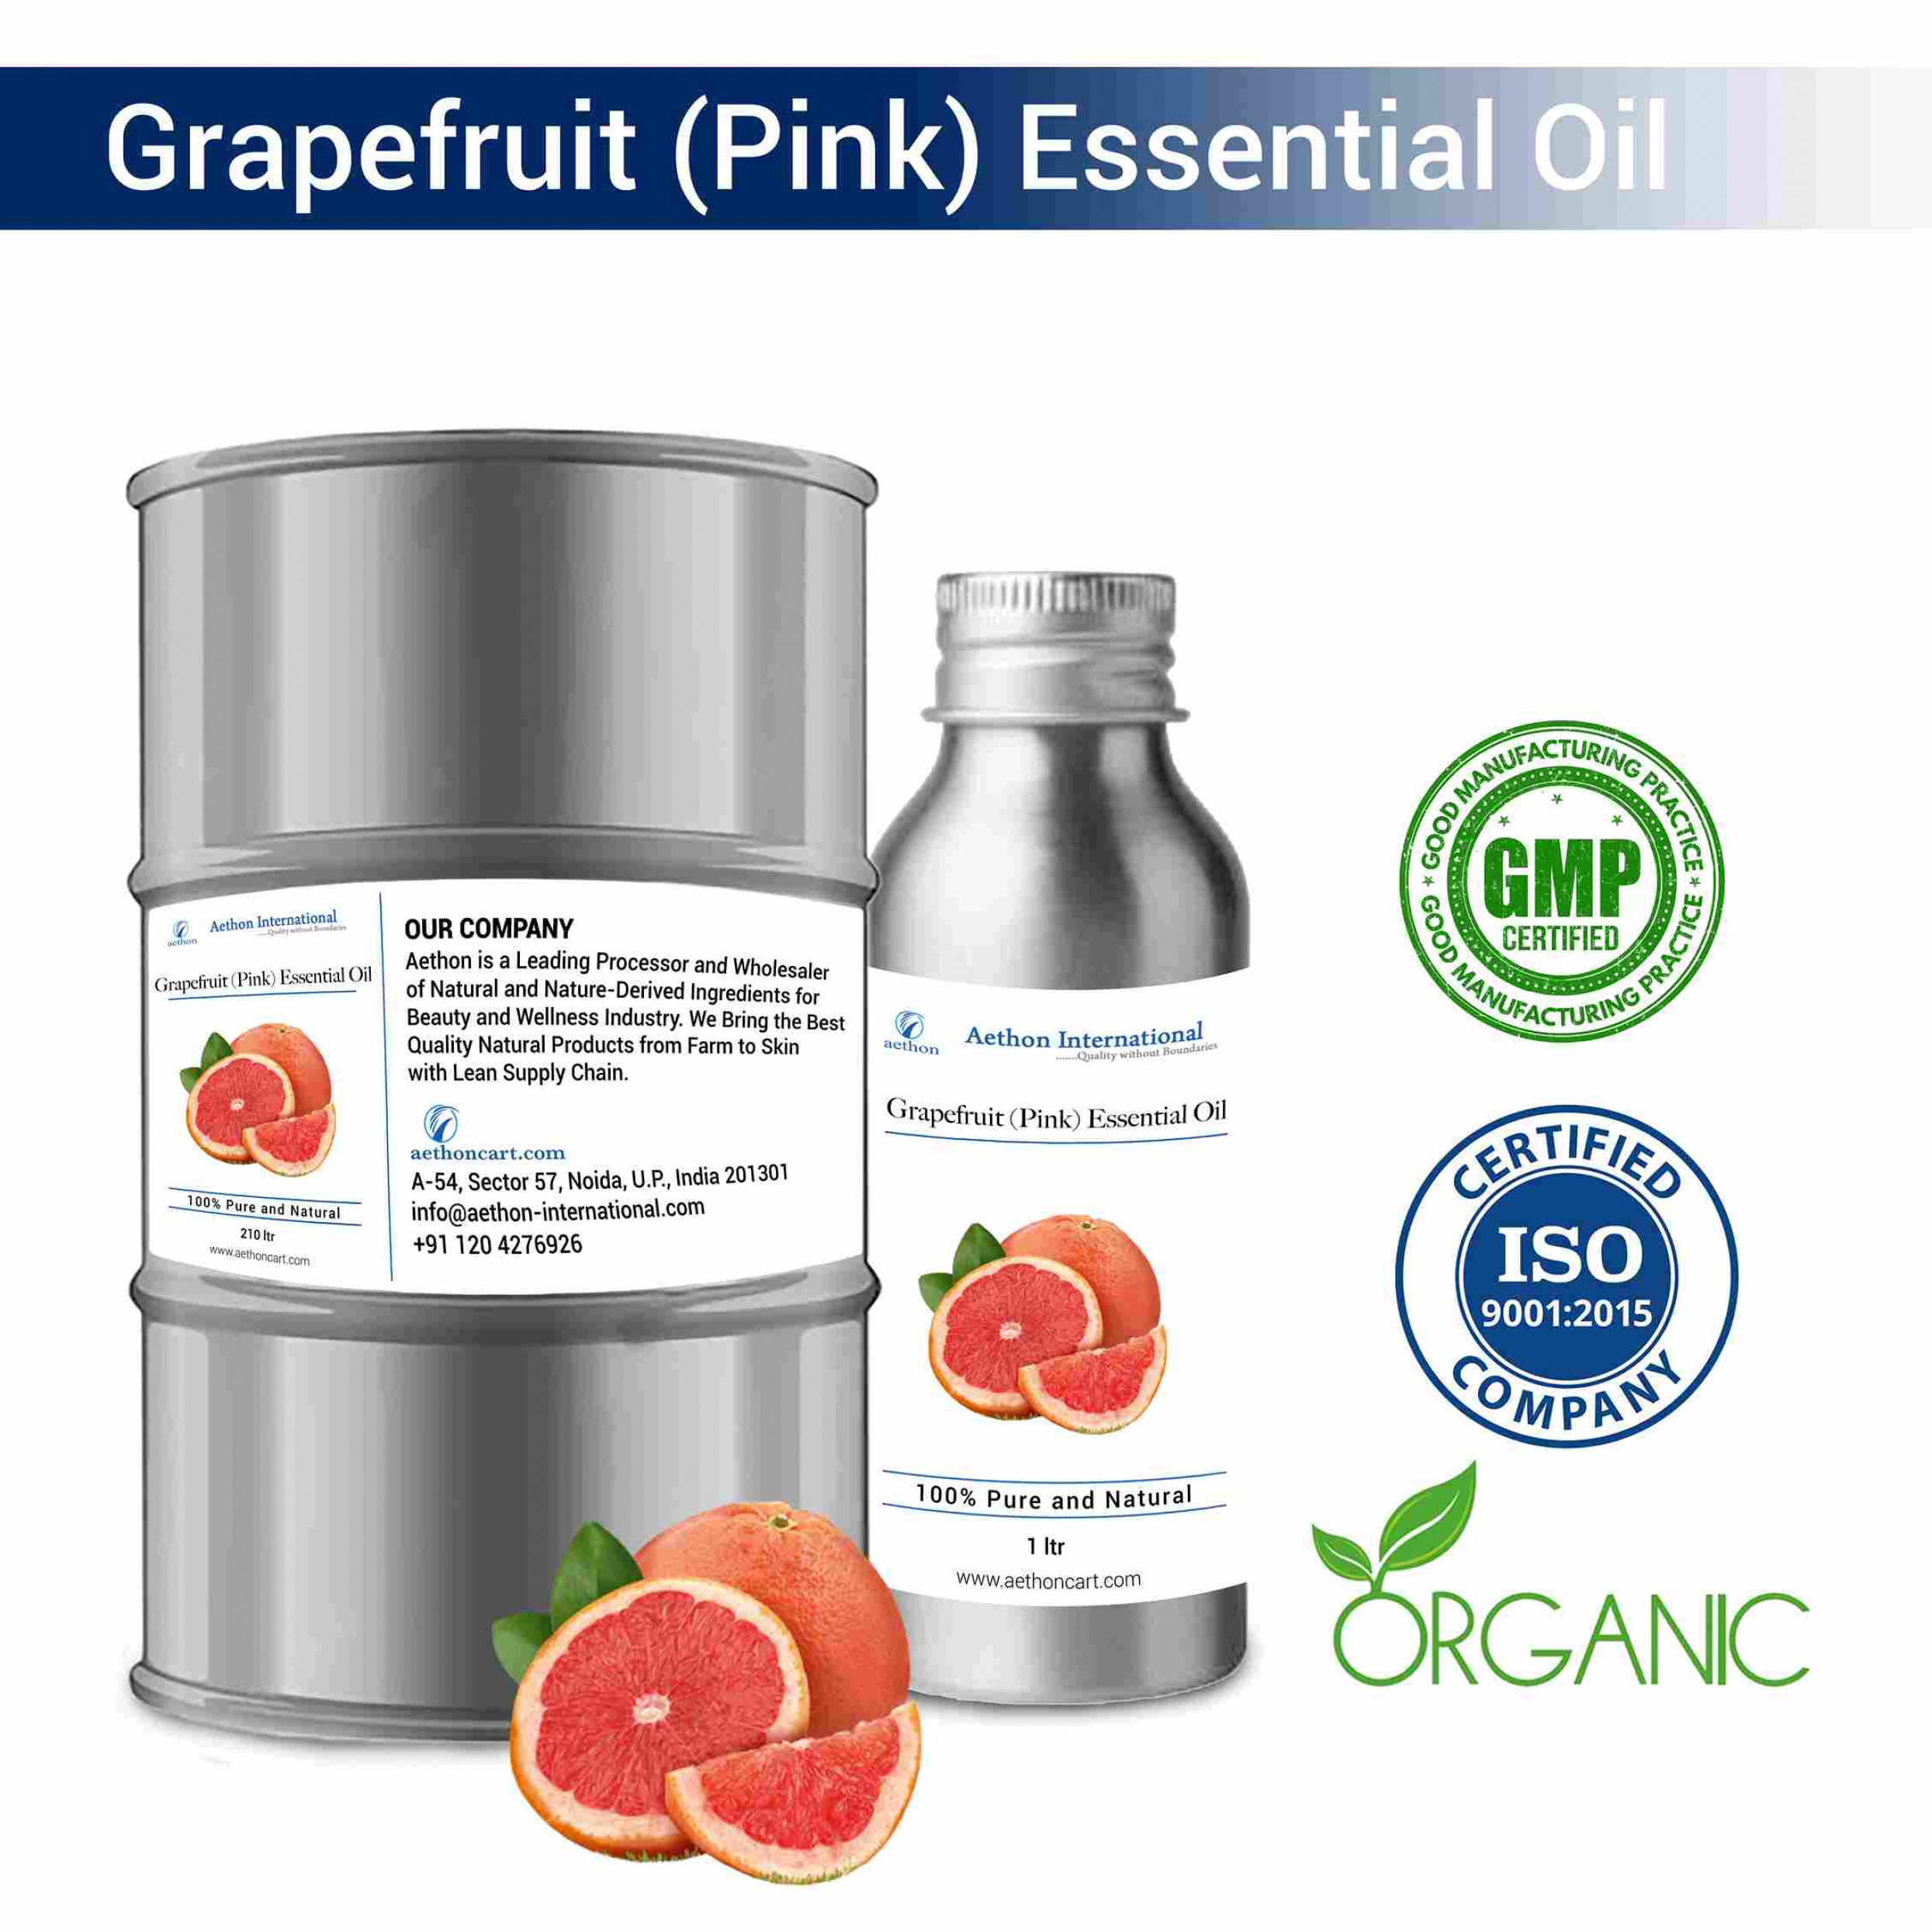 Grapefruit (Pink) Essential Oil